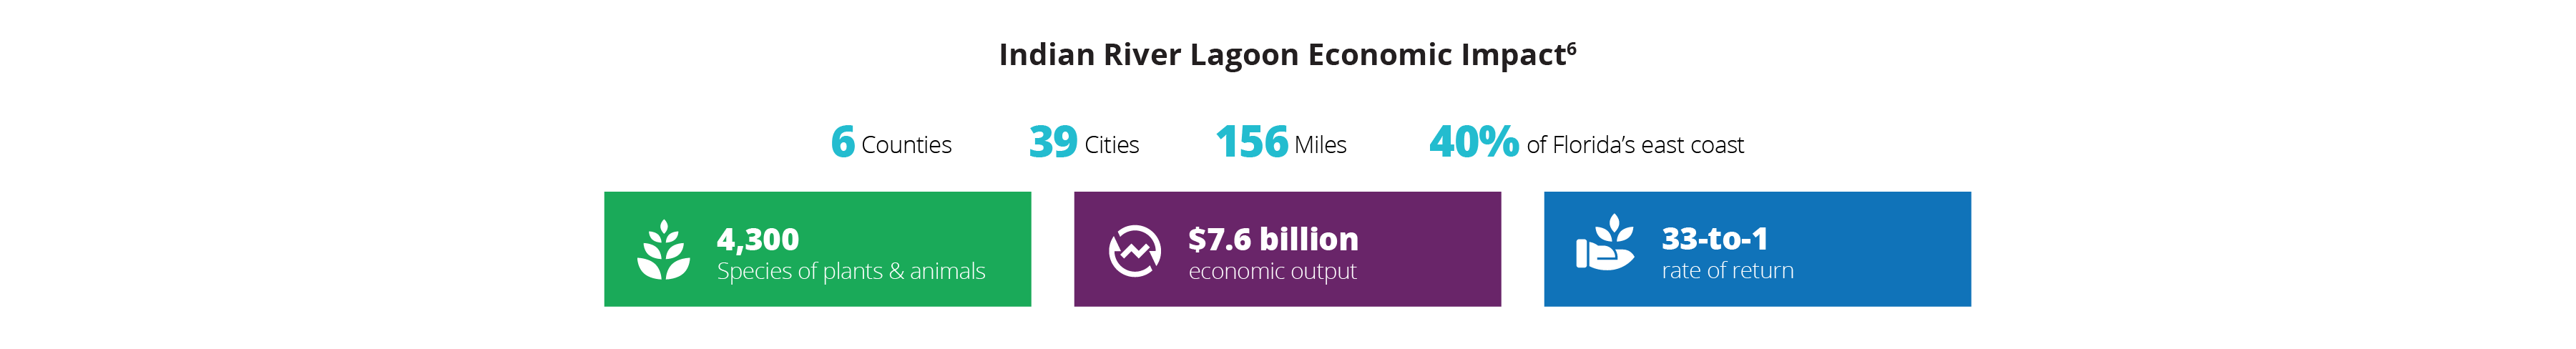 Indian River Lagoon economic impact